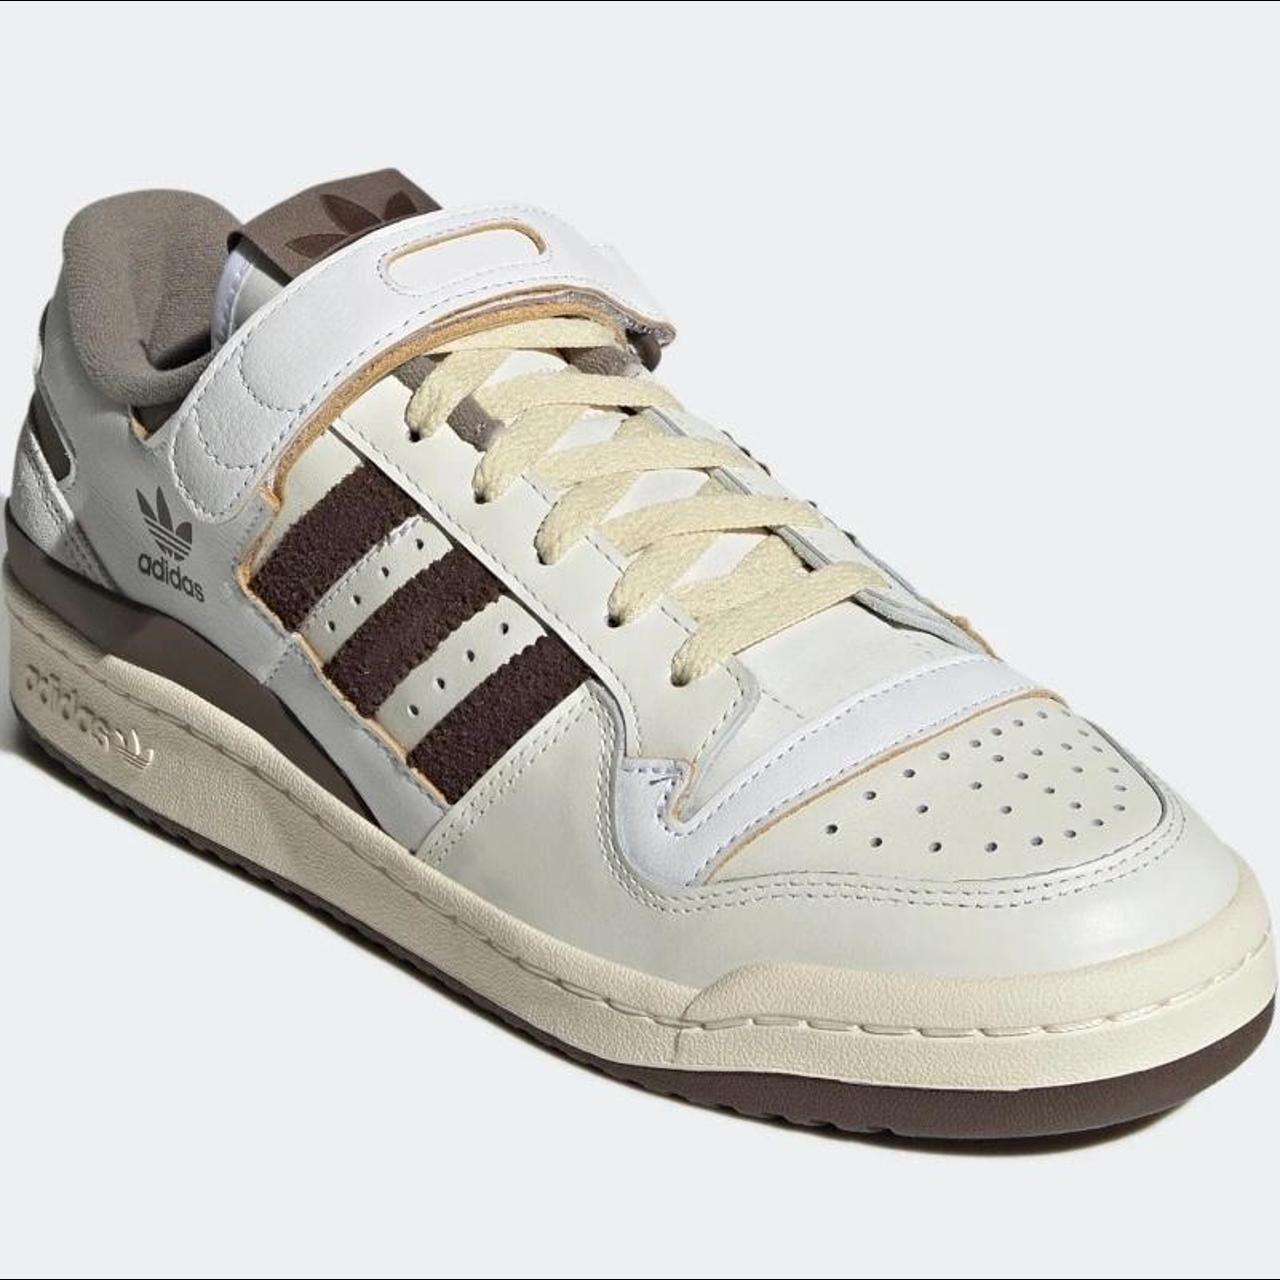 Product Image 1 - Adidas Forum ’84 Low Brown/White/Creme